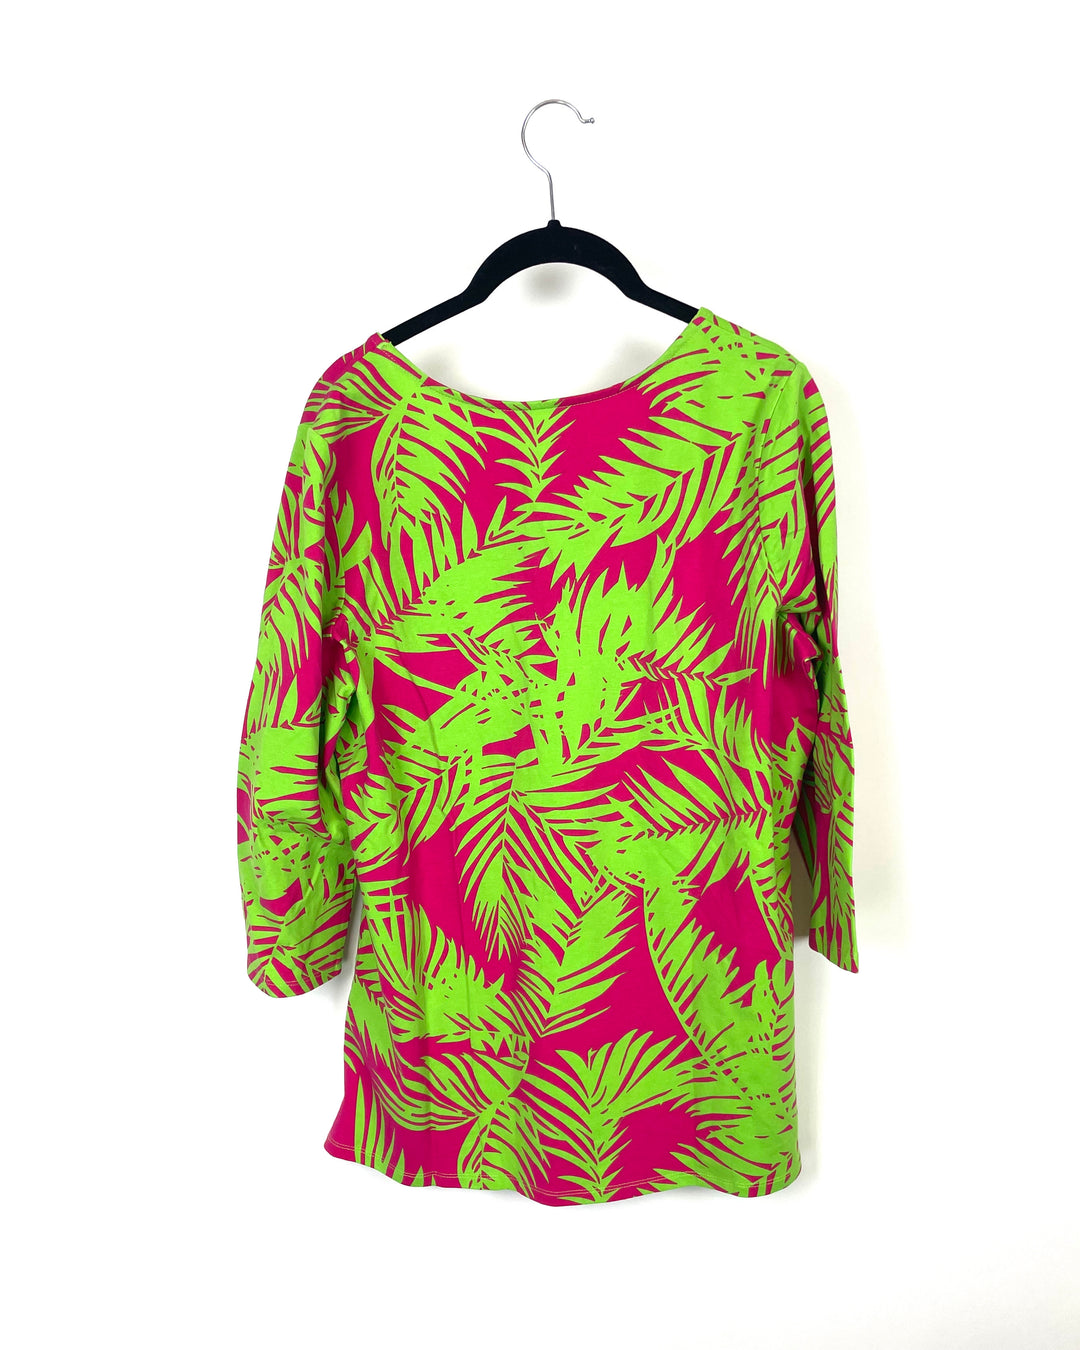 Tropical Green And Pink Long Sleeve Shirt - Small/Medium